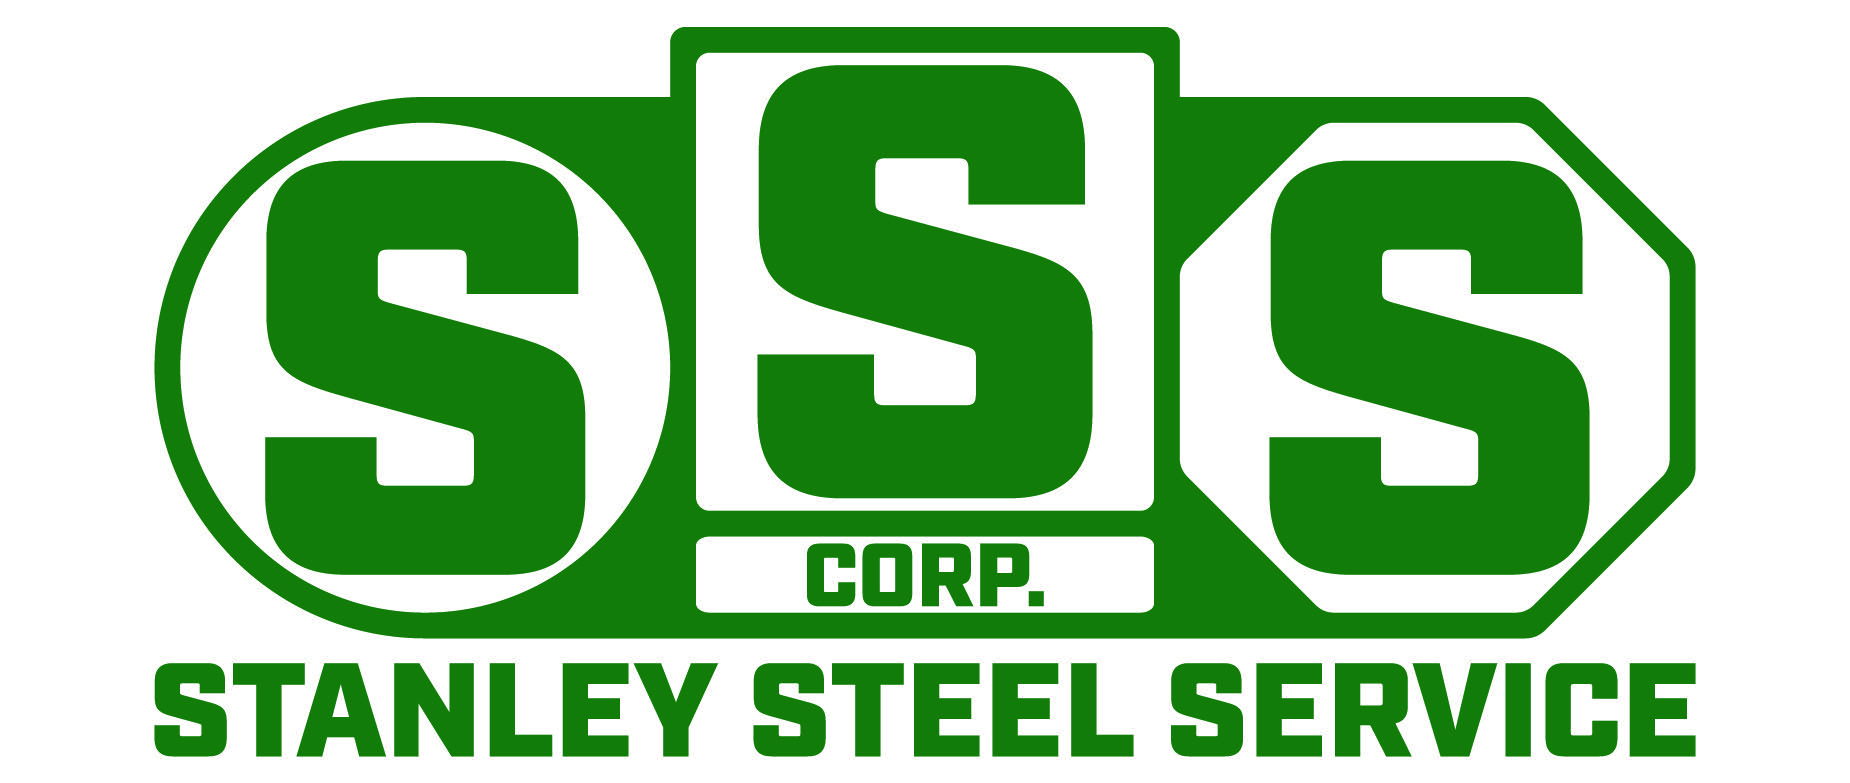 Stanley Steel